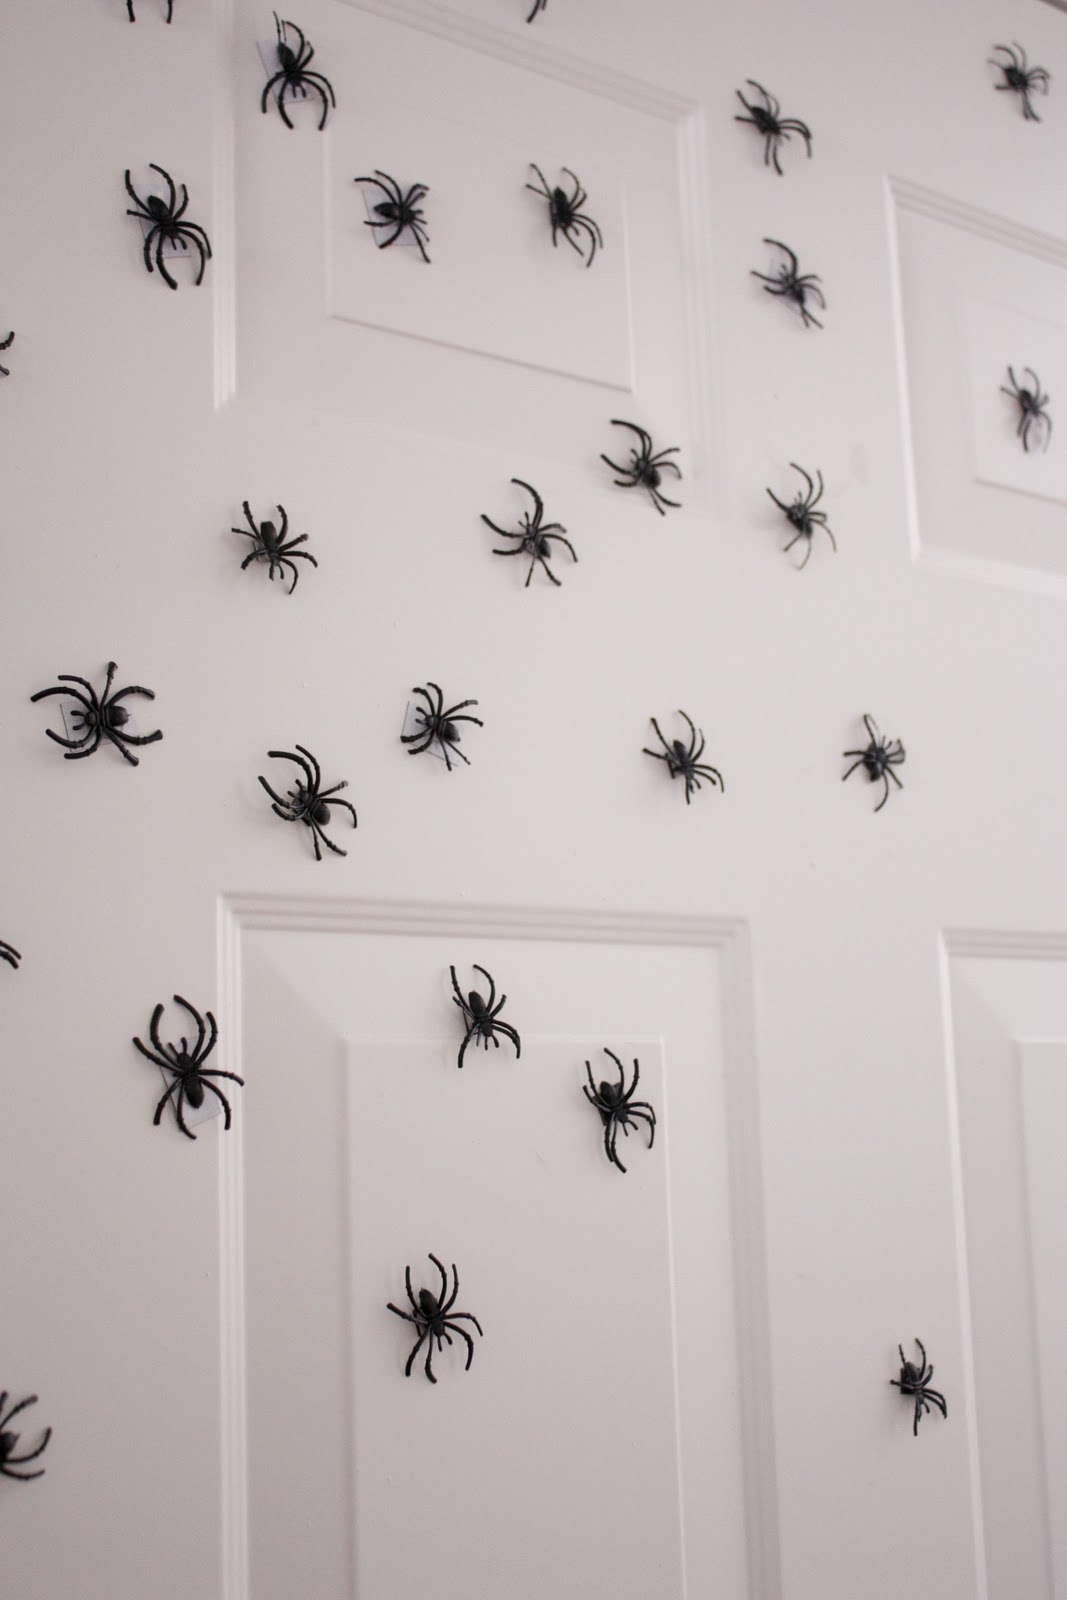 pretty-Spiders-Halloween-Decorations